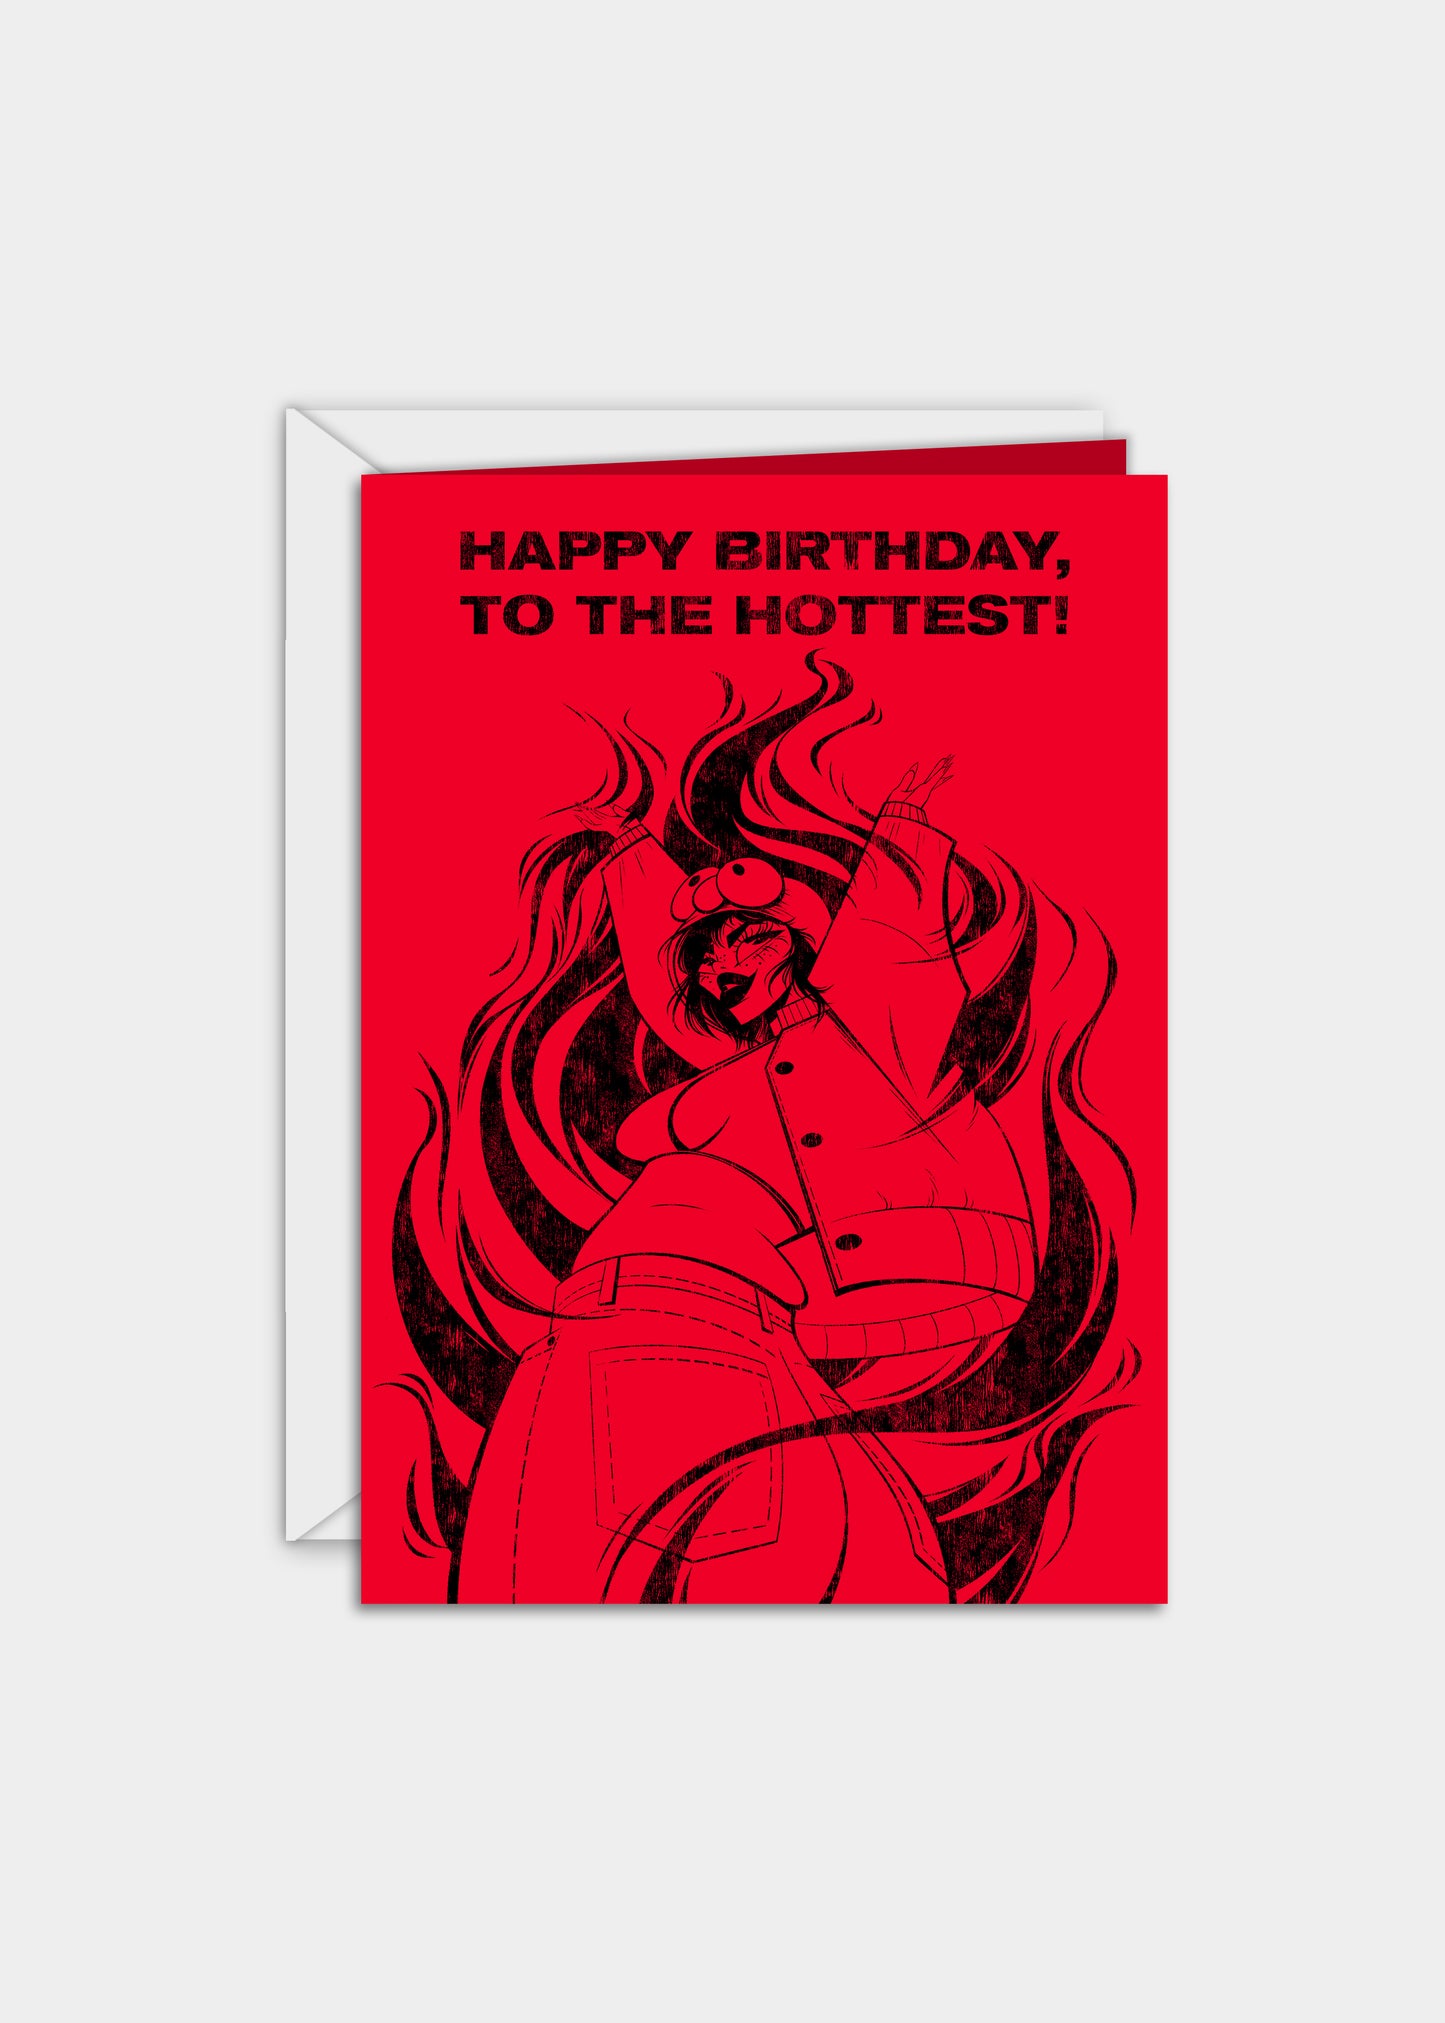 Birthday Hottie Card